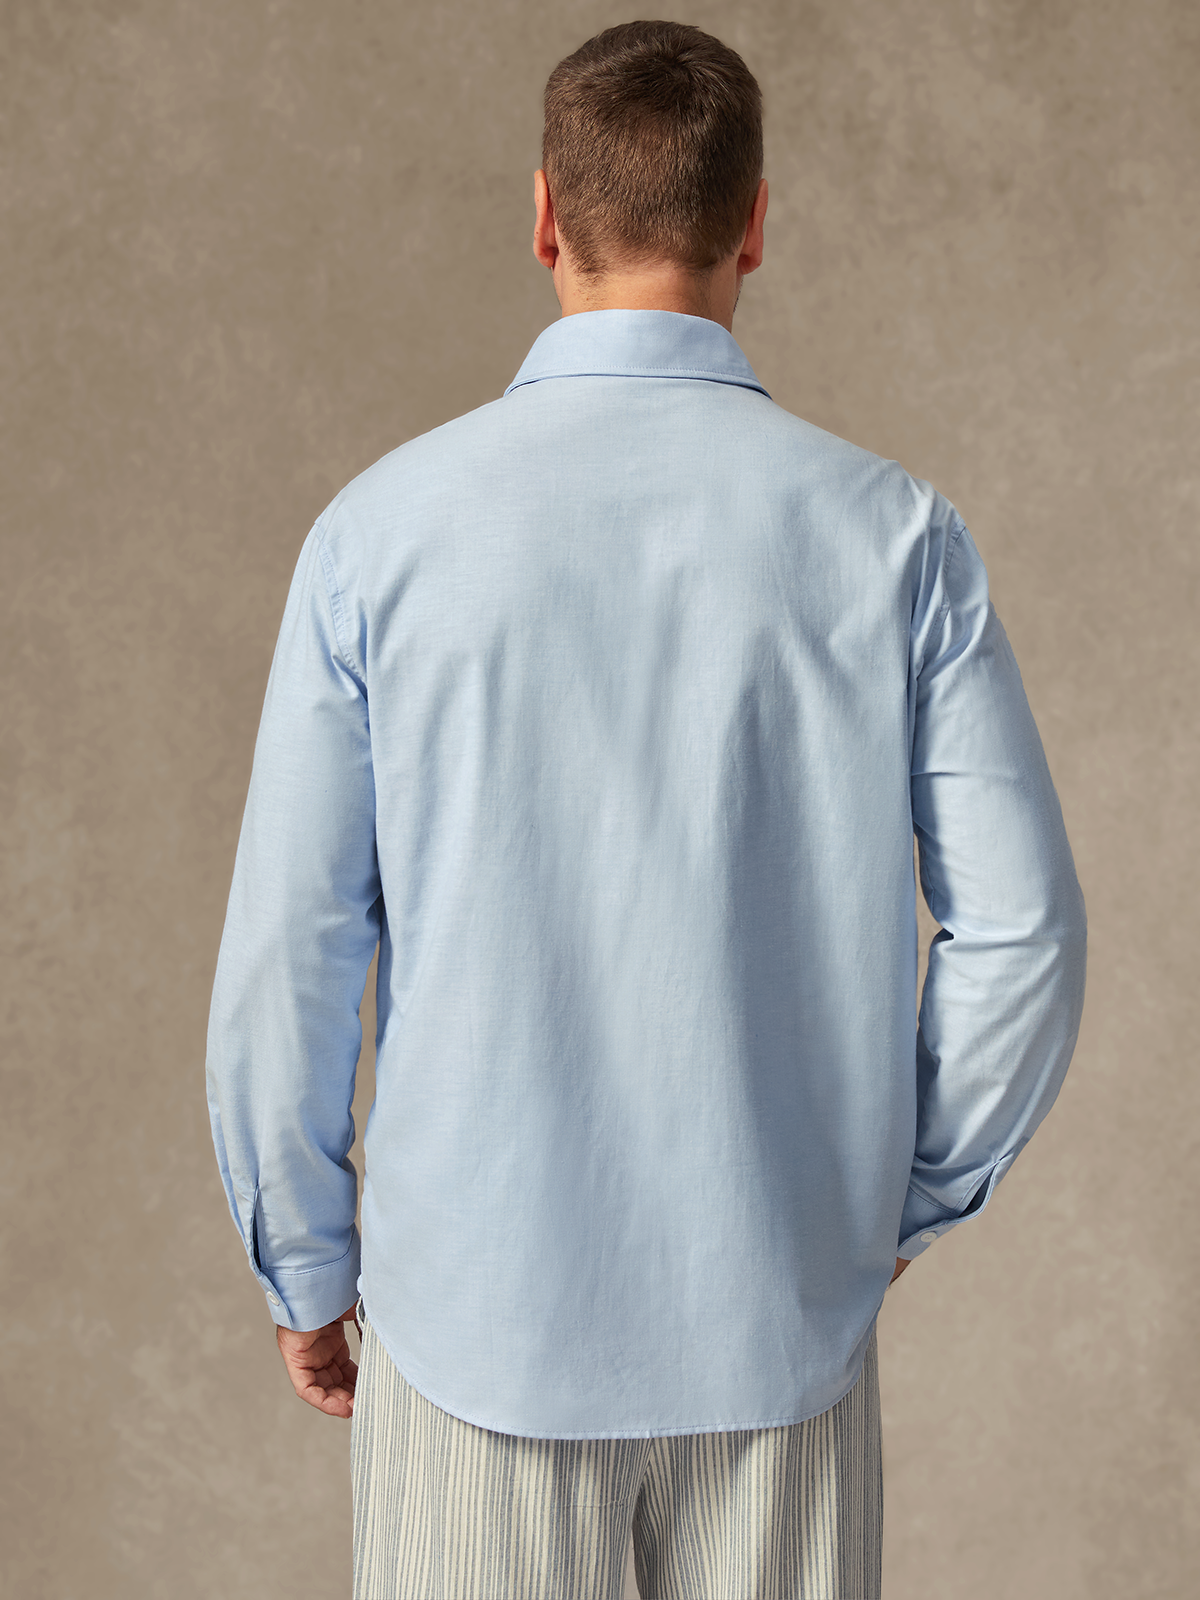 Hardaddy Cotton Marlin Printing  Sleeve Casual Shirt